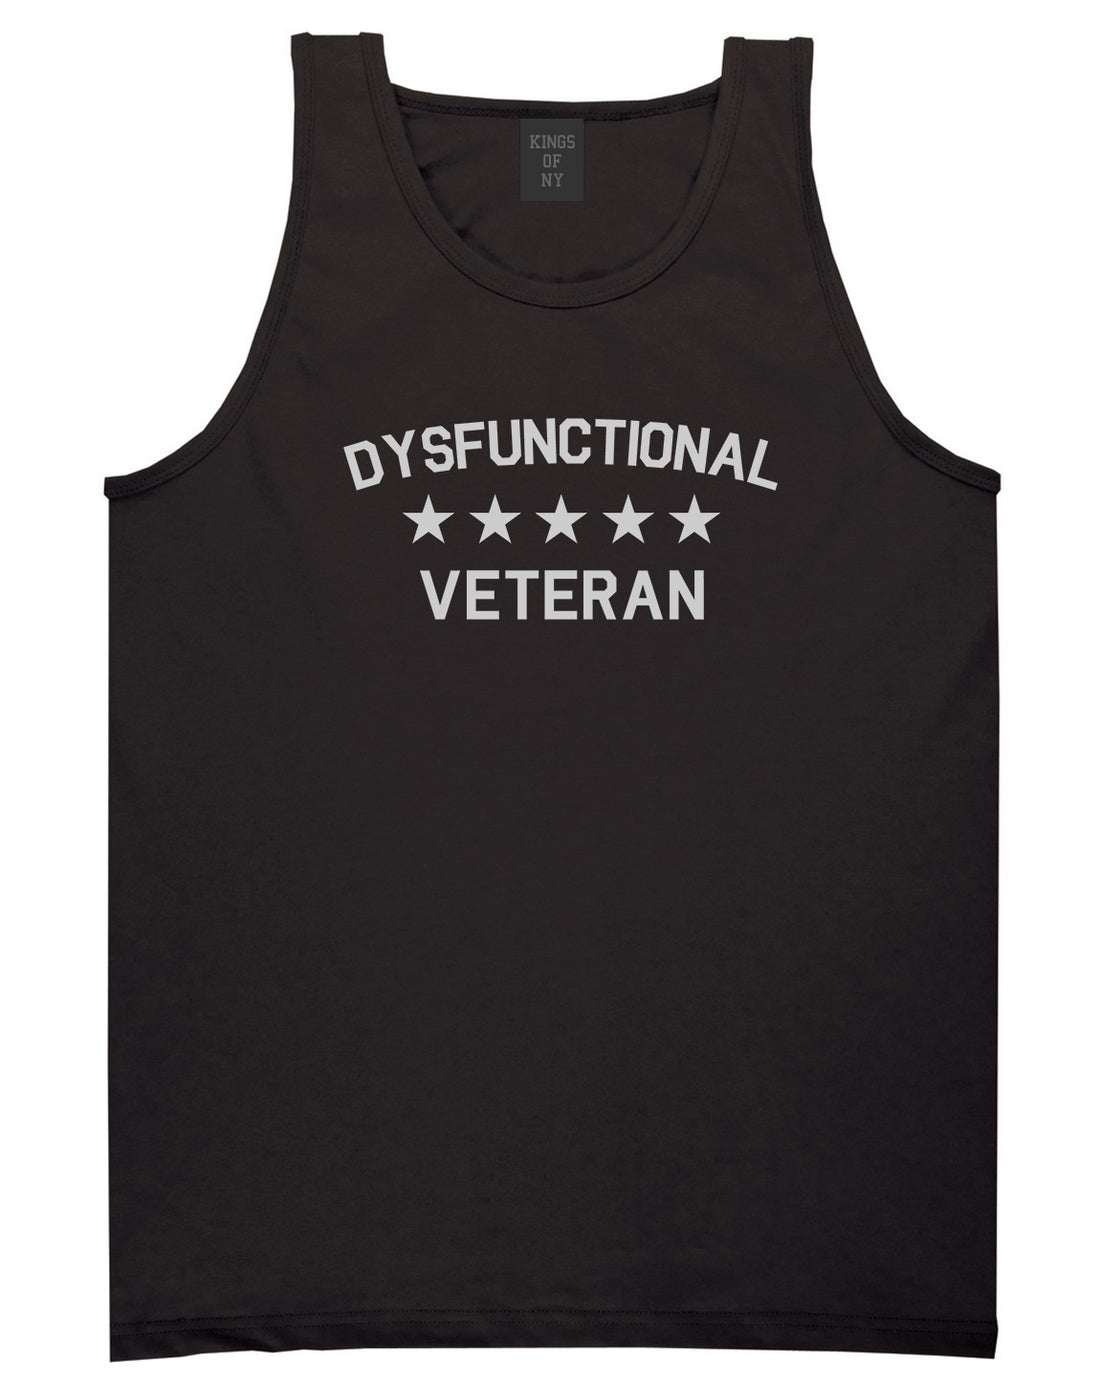 Dysfunctional Veteran Mens Tank Top Shirt Black